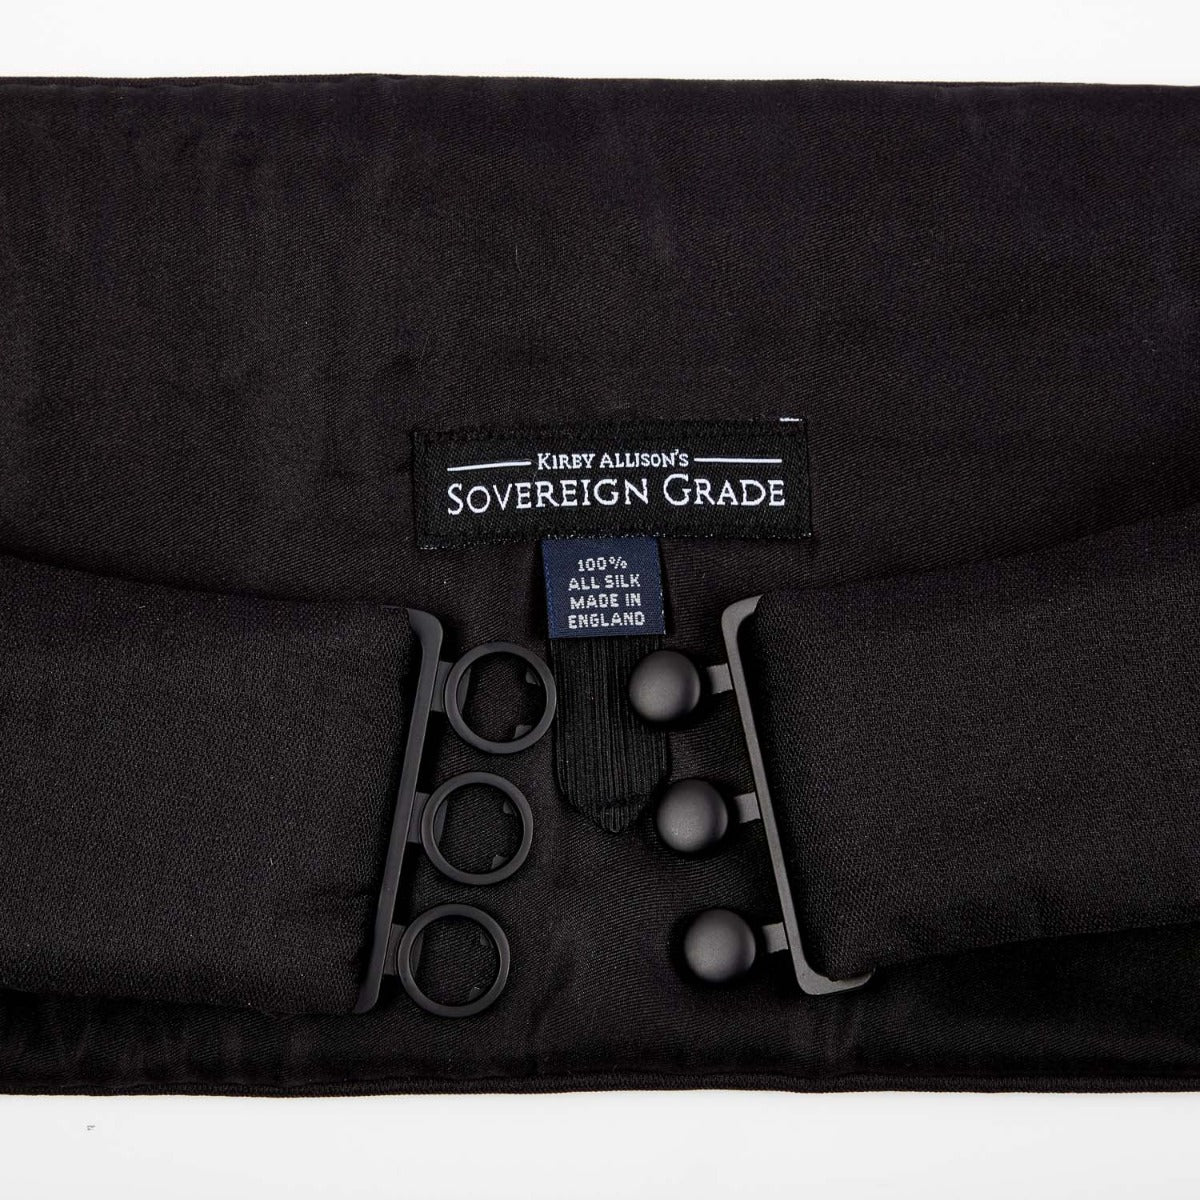 A Sovereign Grade Black Barathea Cummerbund, made of black barathea silk and featuring two KirbyAllison.com buckles, serving as a formalwear accessory.